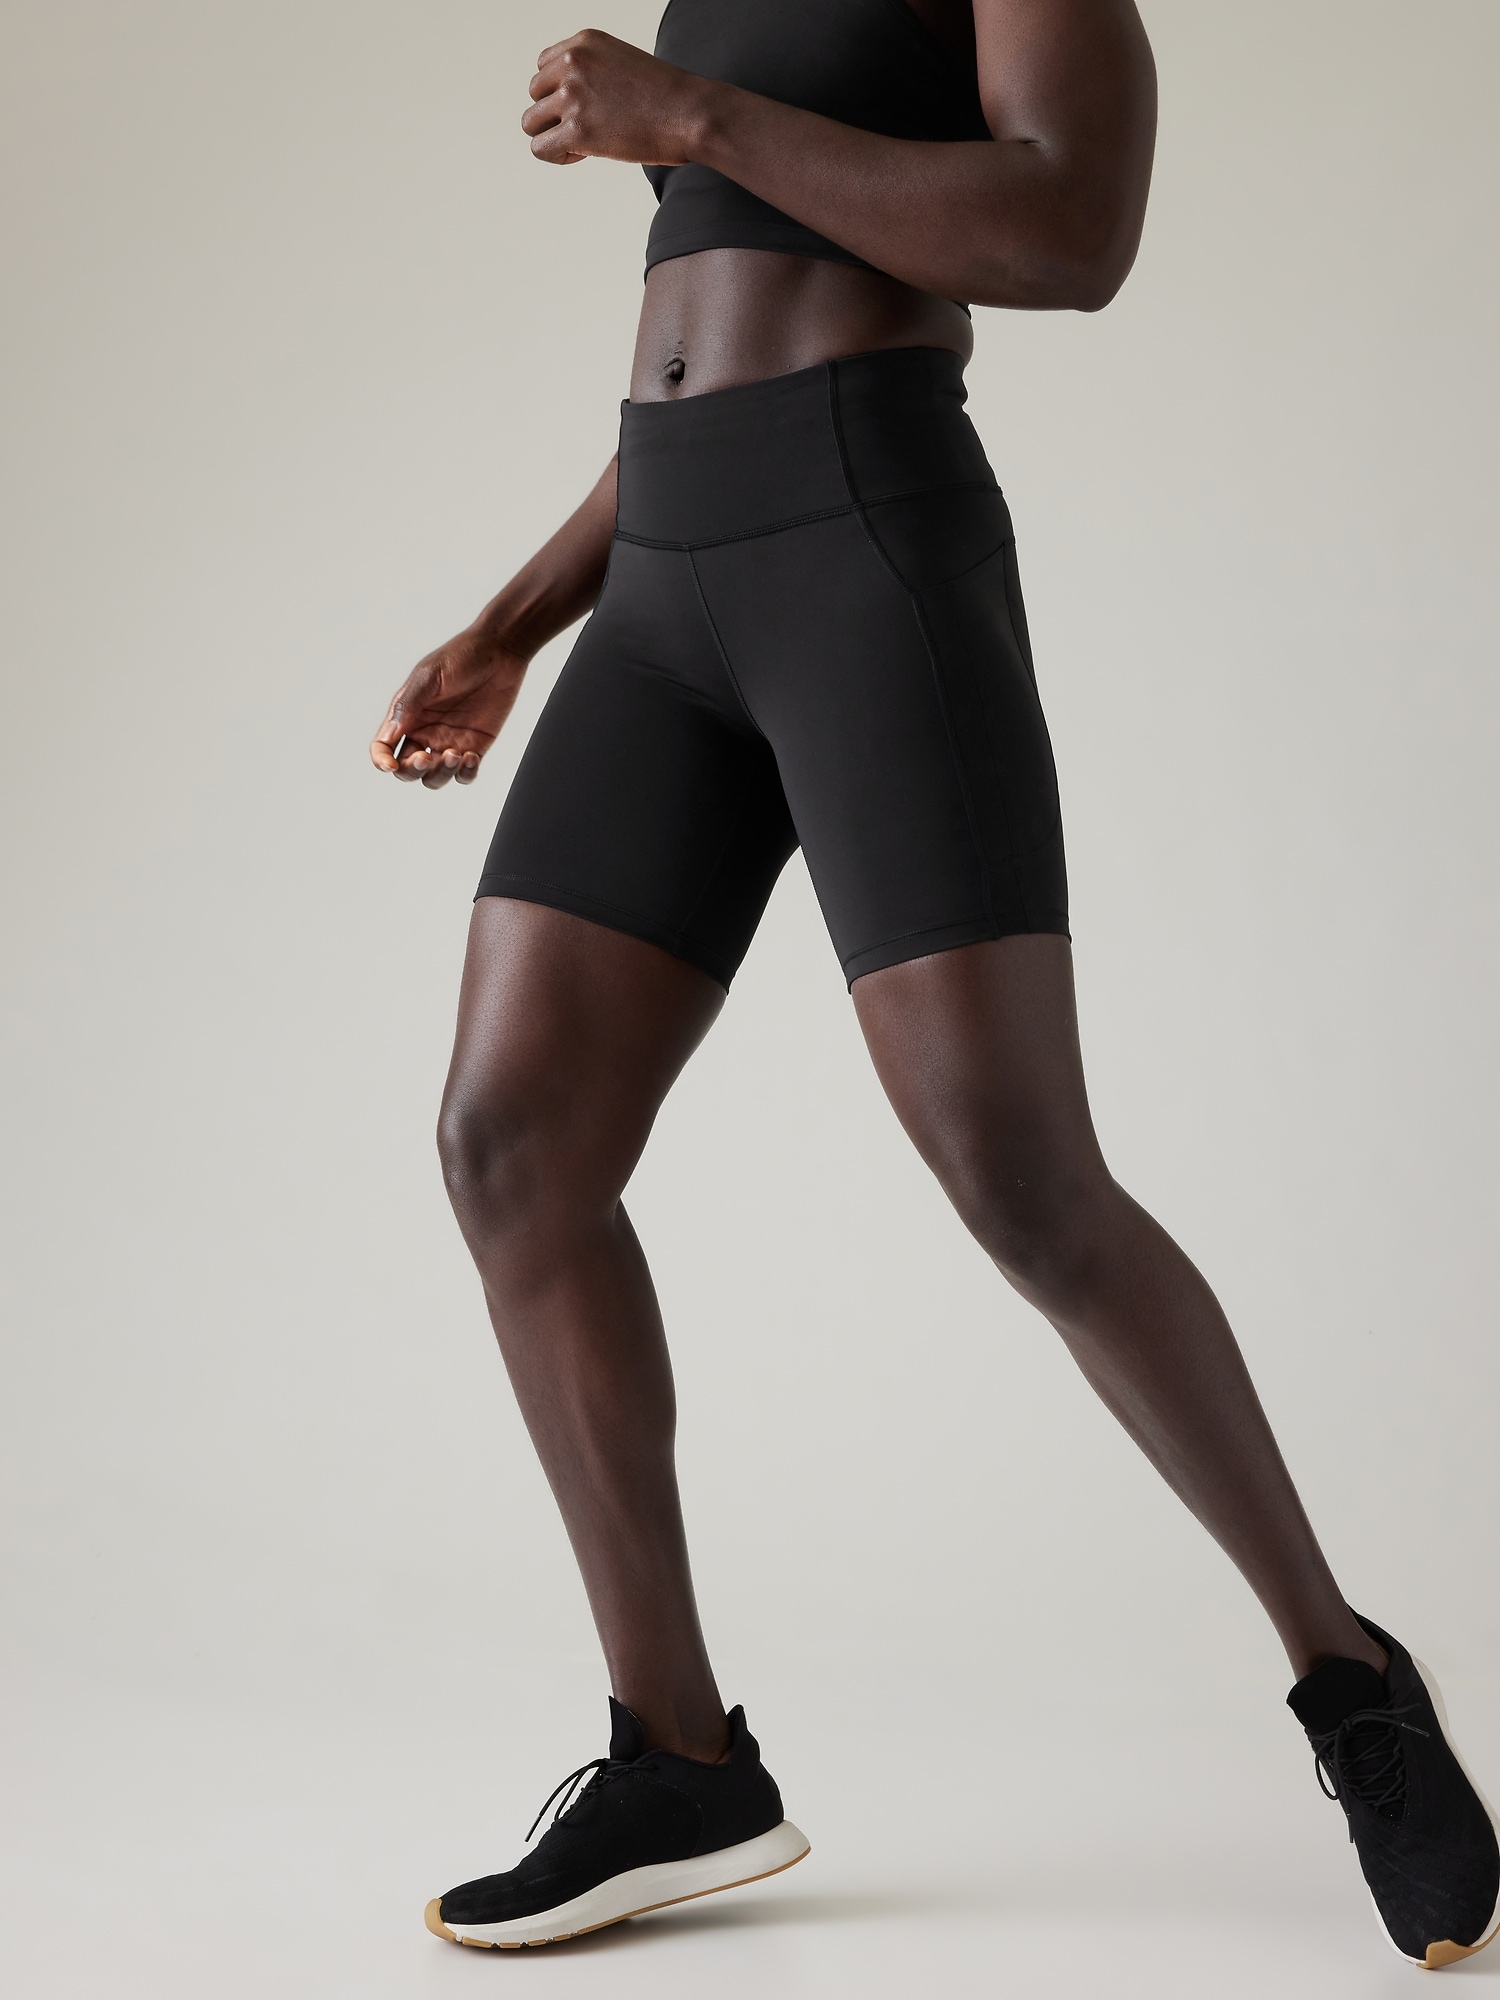 Zenana Biker Shorts - Short Leggings With Pockets - Z Clothing Co.